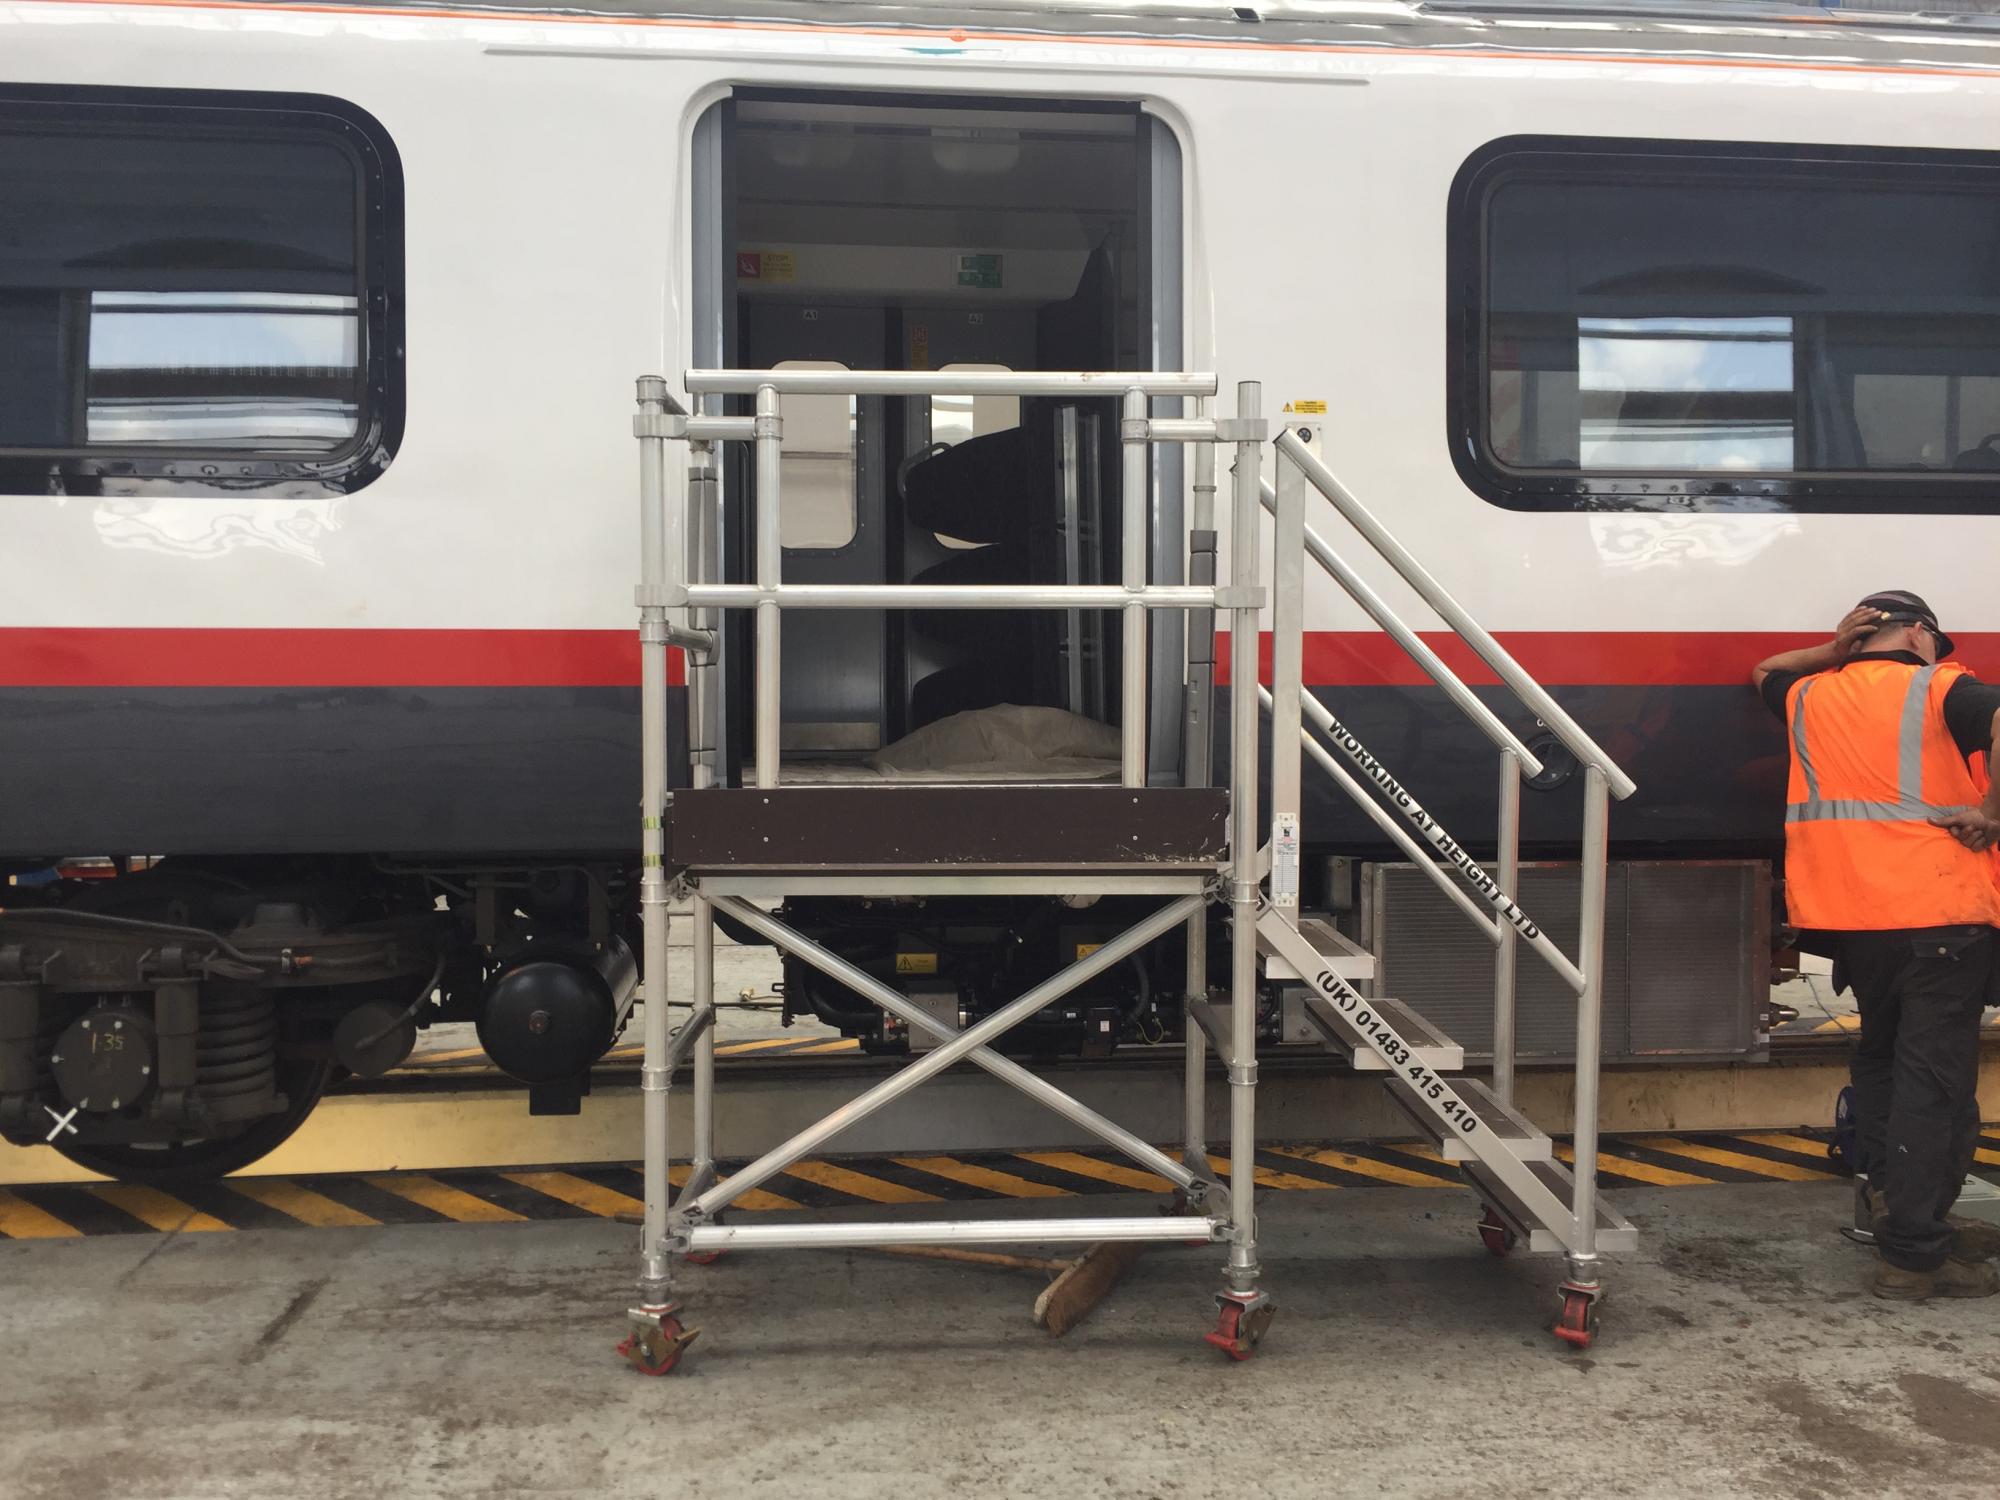 Rail Access Platforms